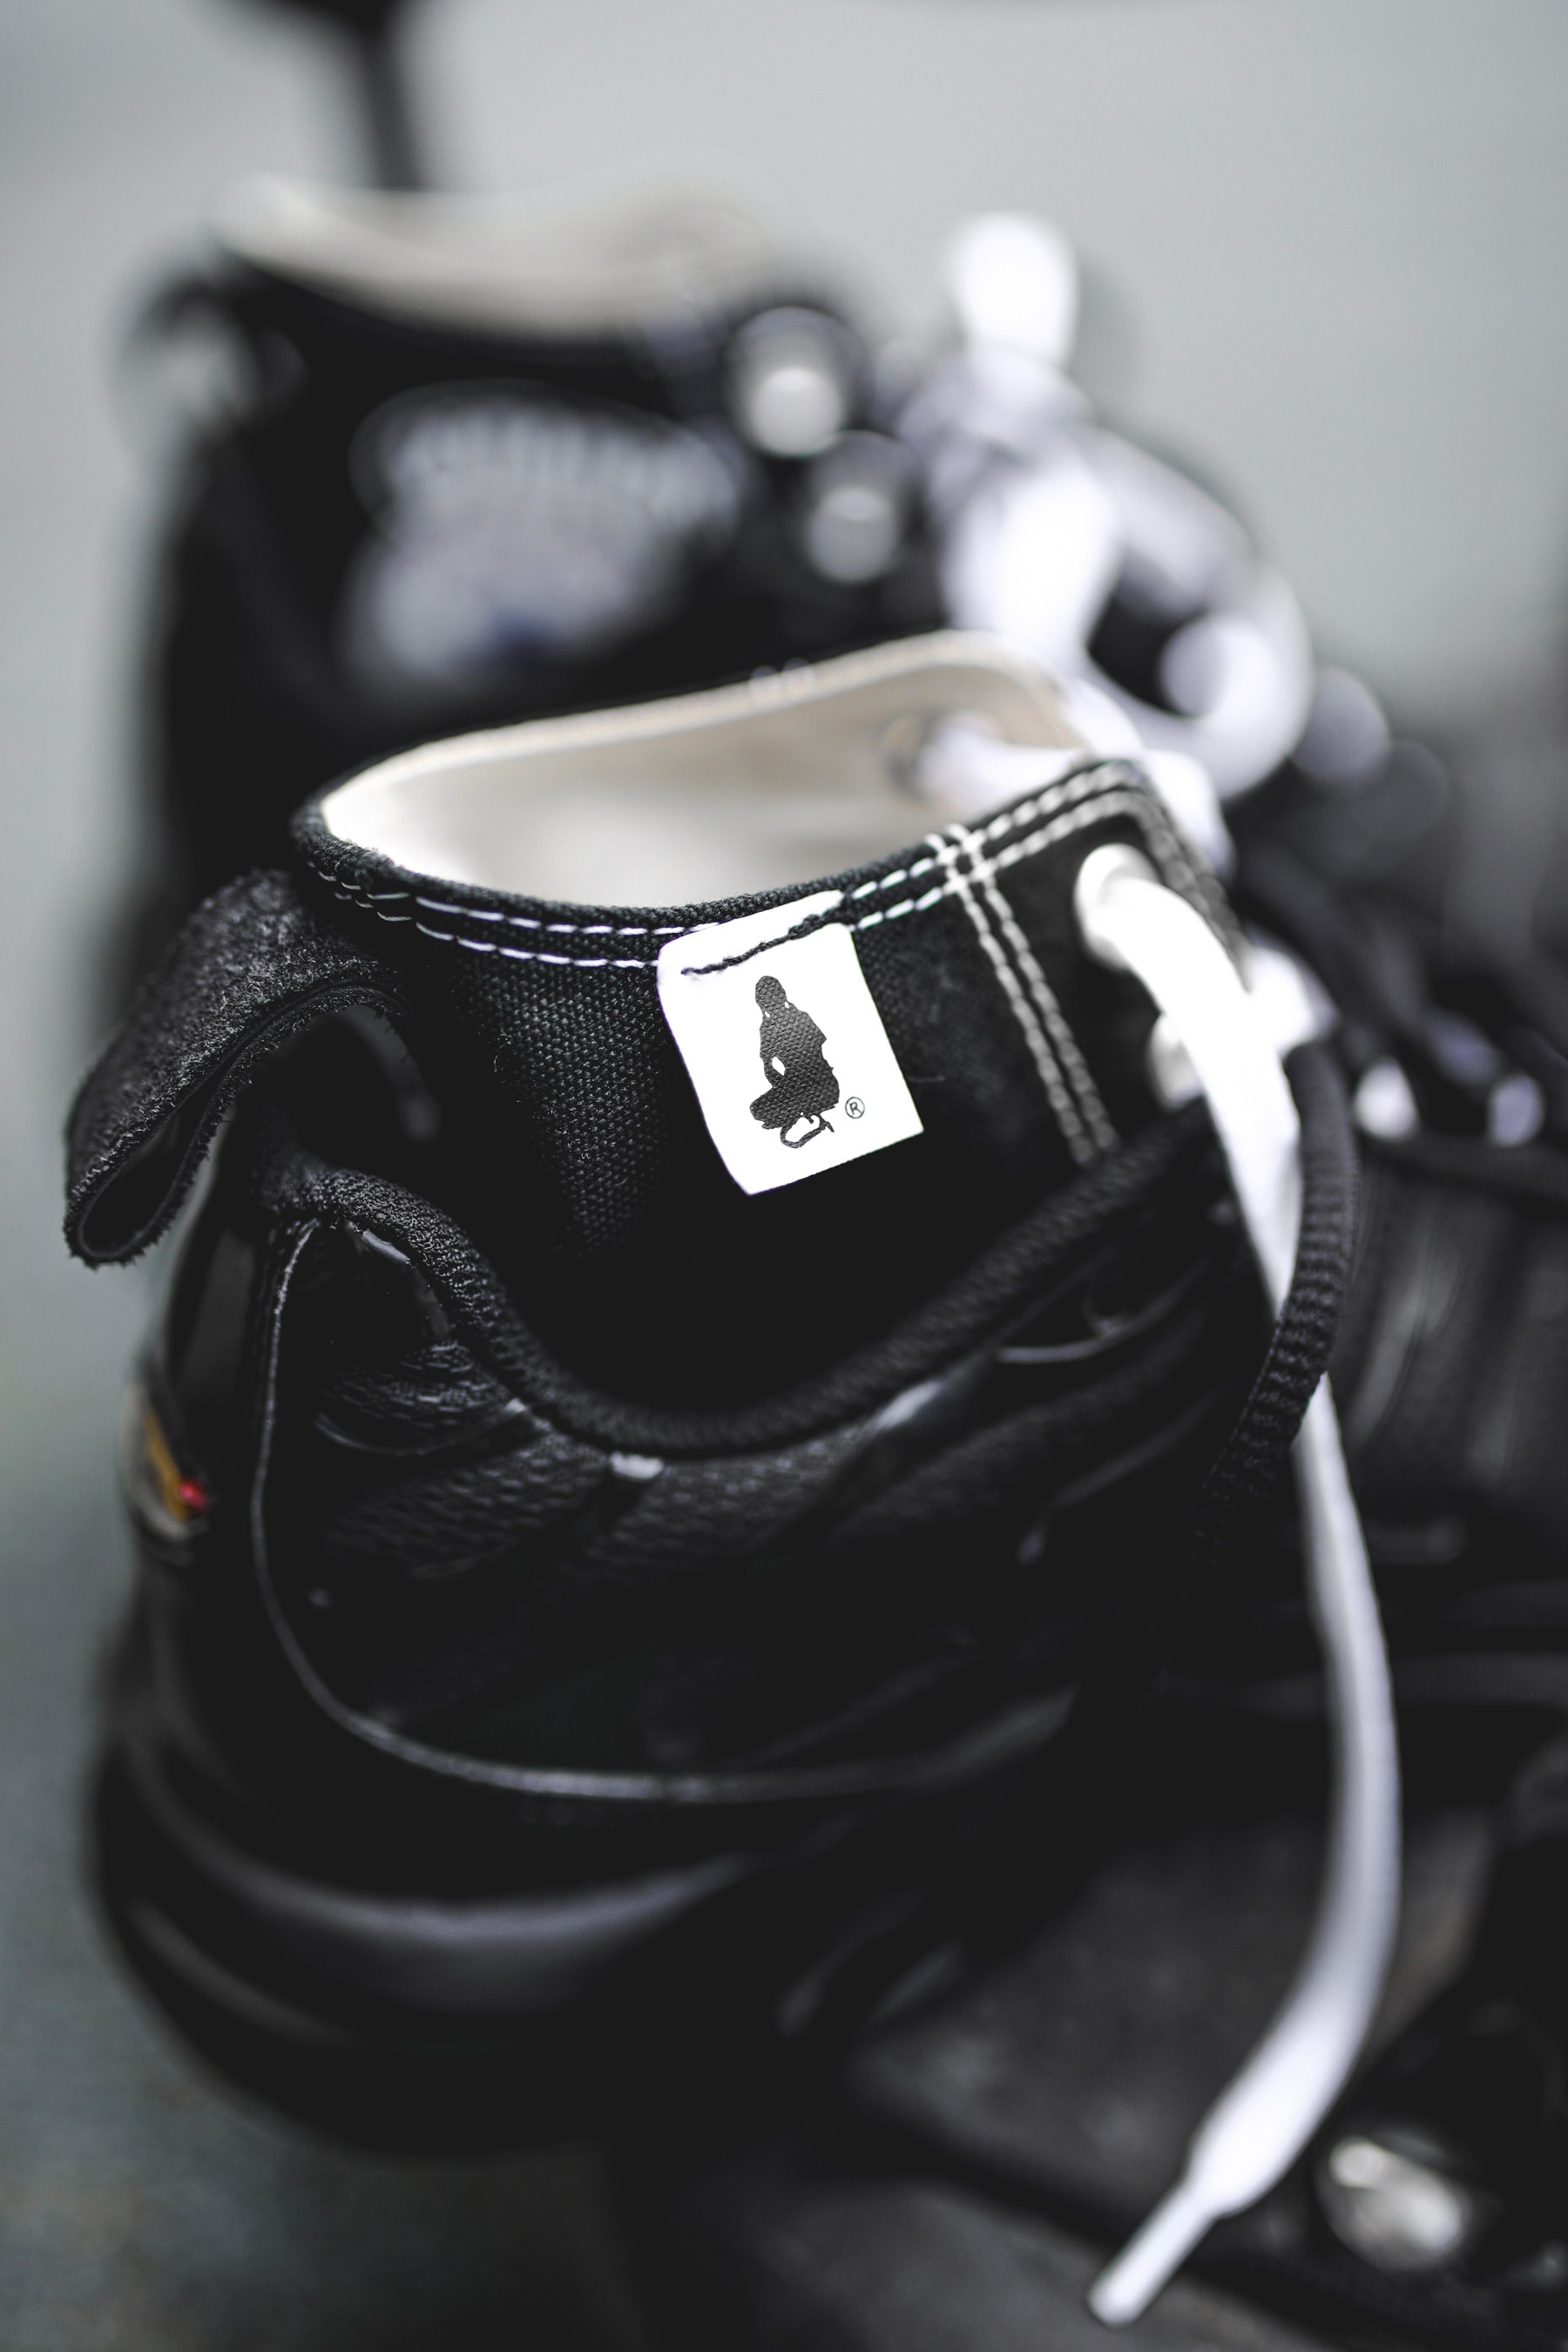 WWWESH STUDIO & Heightened's Nike Air Max Tn/Converse Chuck Taylor Hybrid sneakers custom sneakers